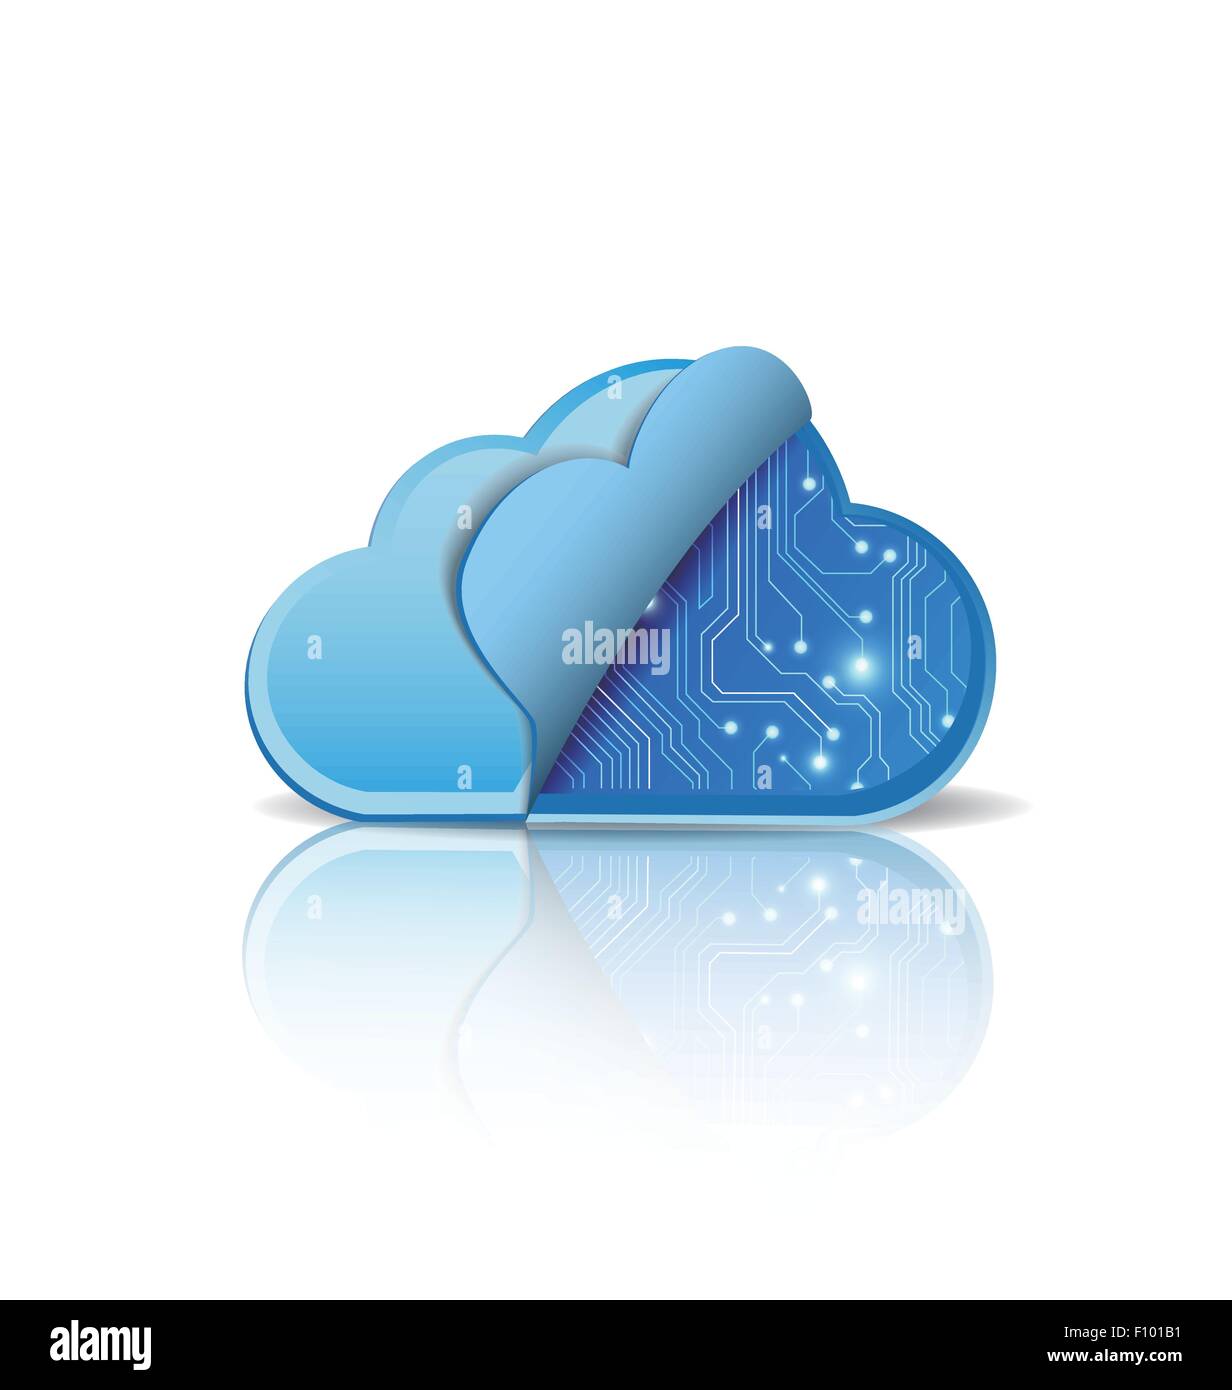 Cloud computing mit Elektronikeinsatz Stock Vektor